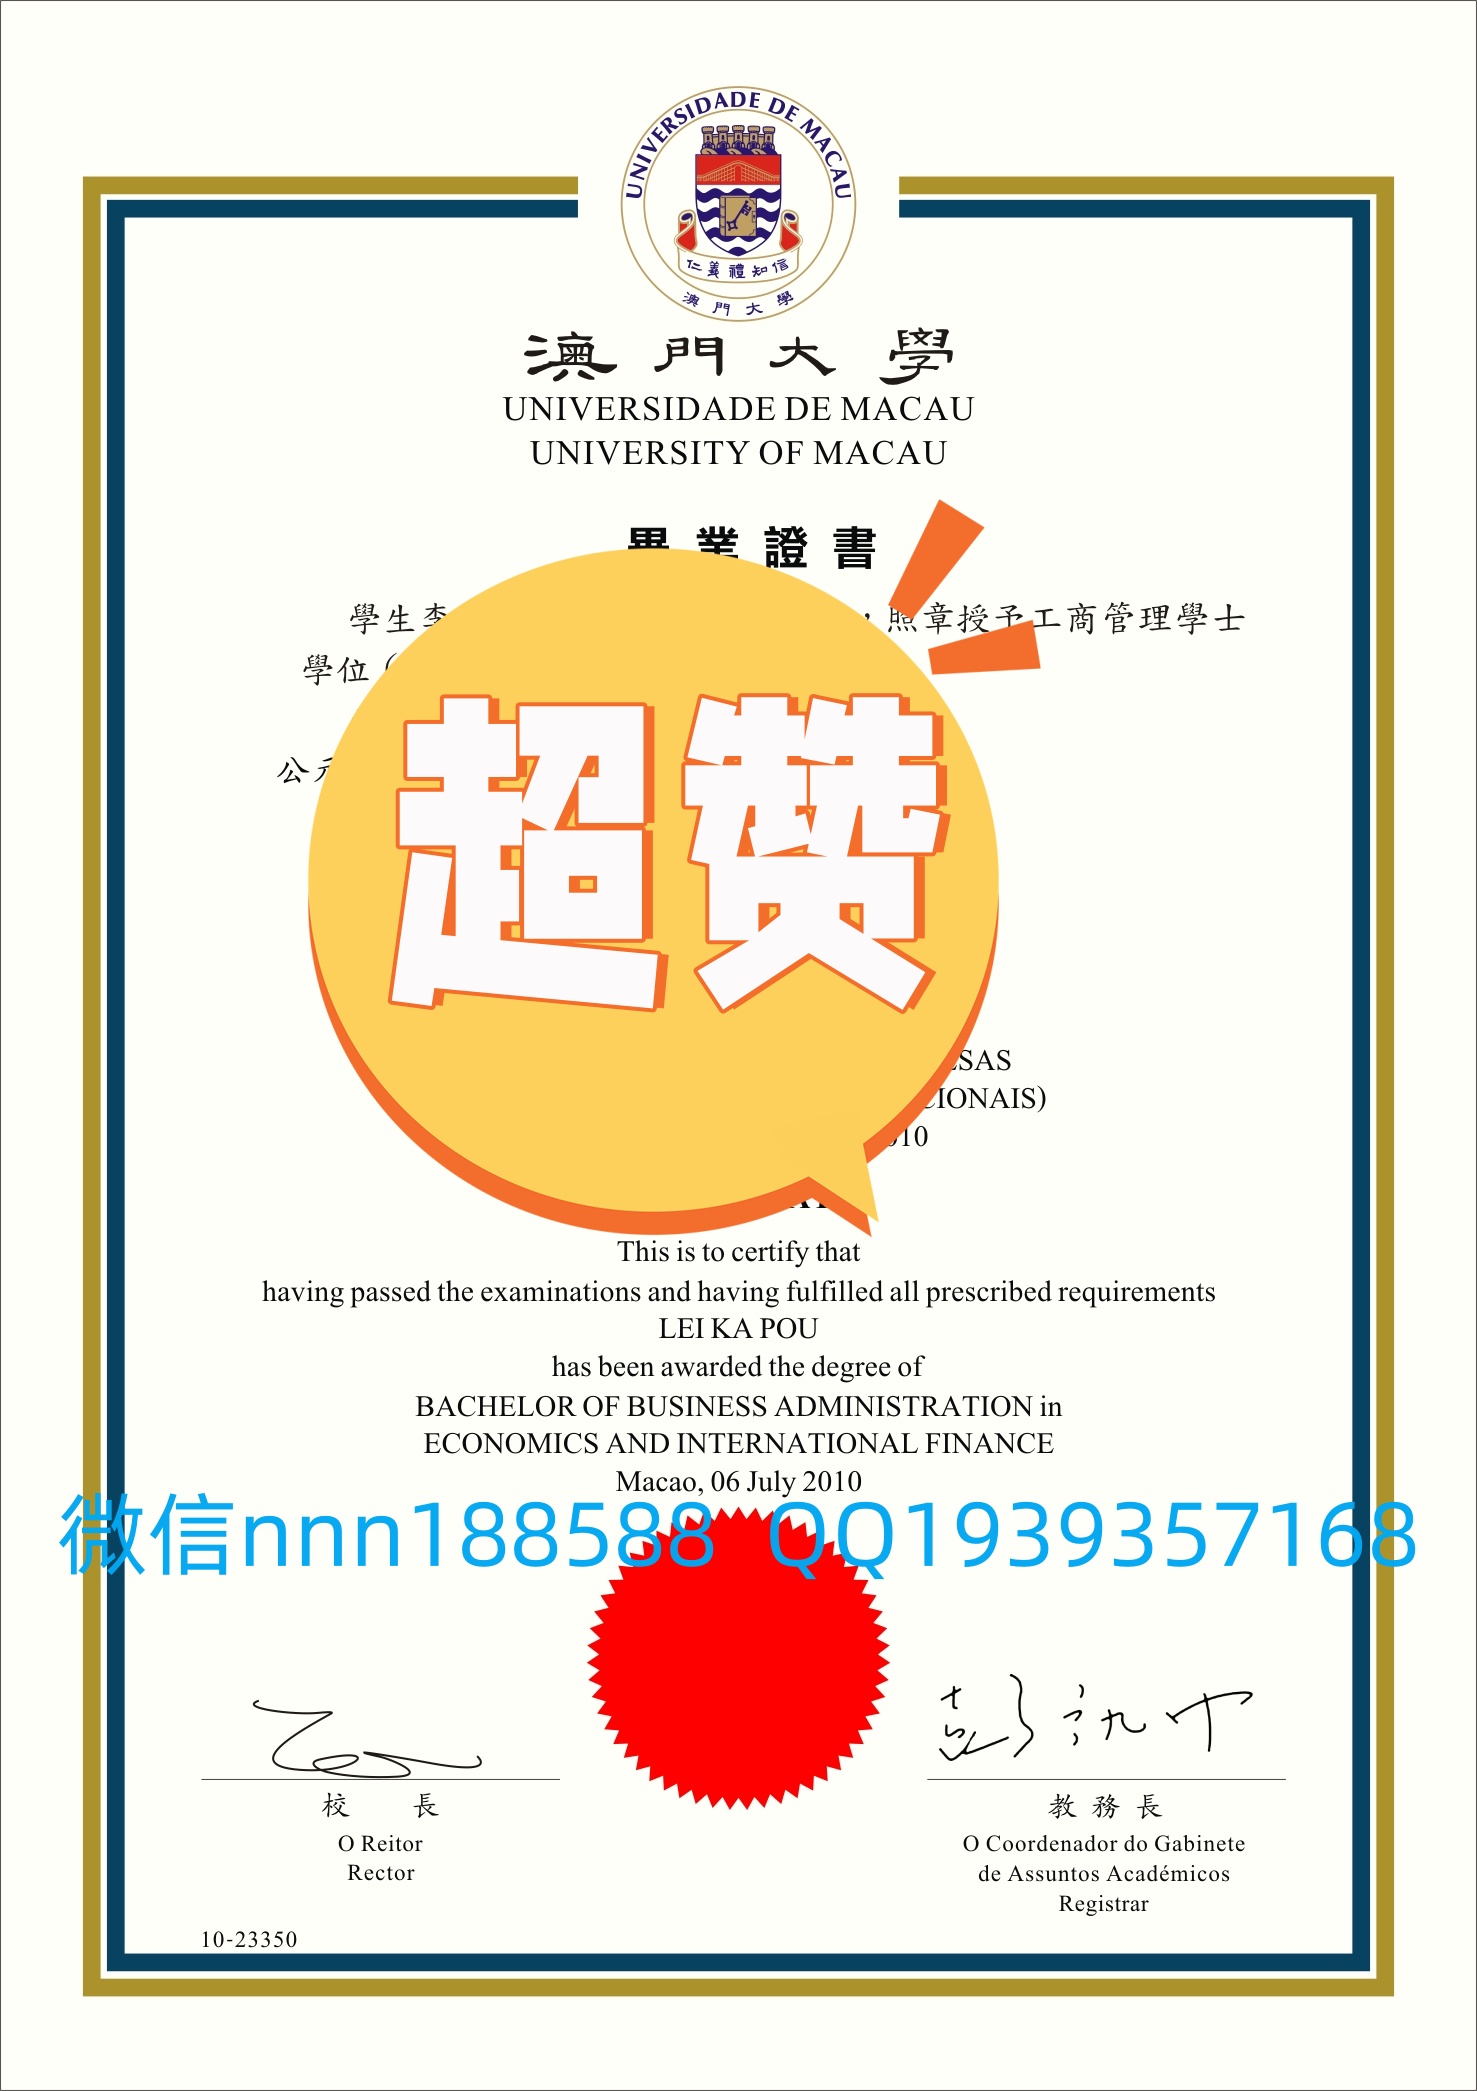 Graduation Certificate of the University of Macau